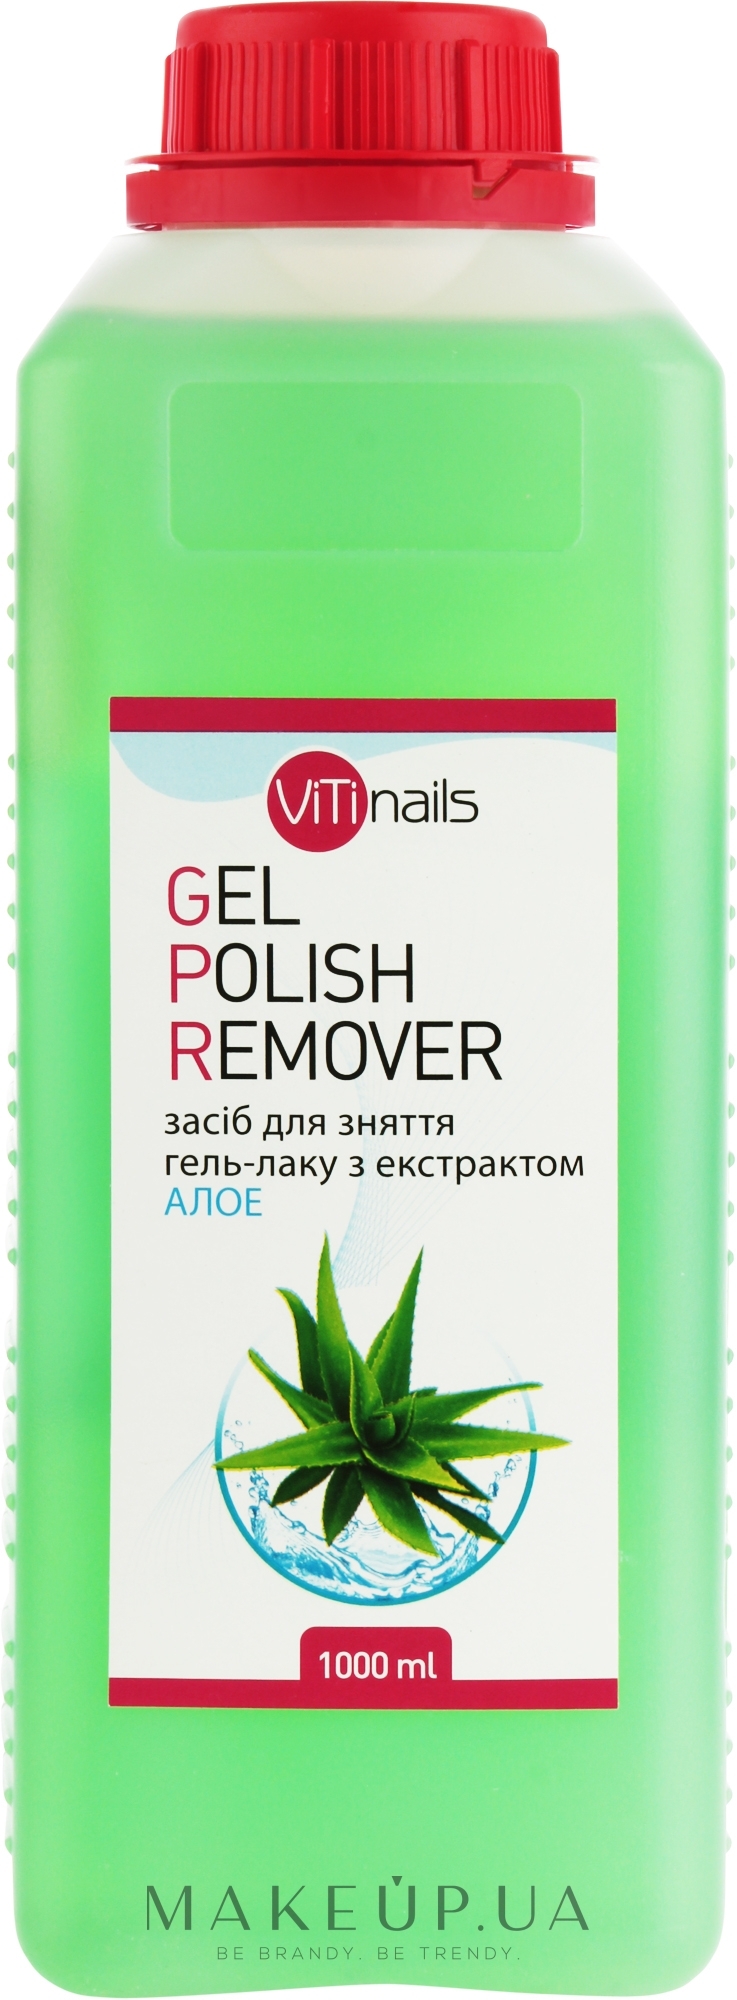 Рідина для зняття гель-лаку з екстрактом алое - ViTinails Gel Polish Remover — фото 1000ml